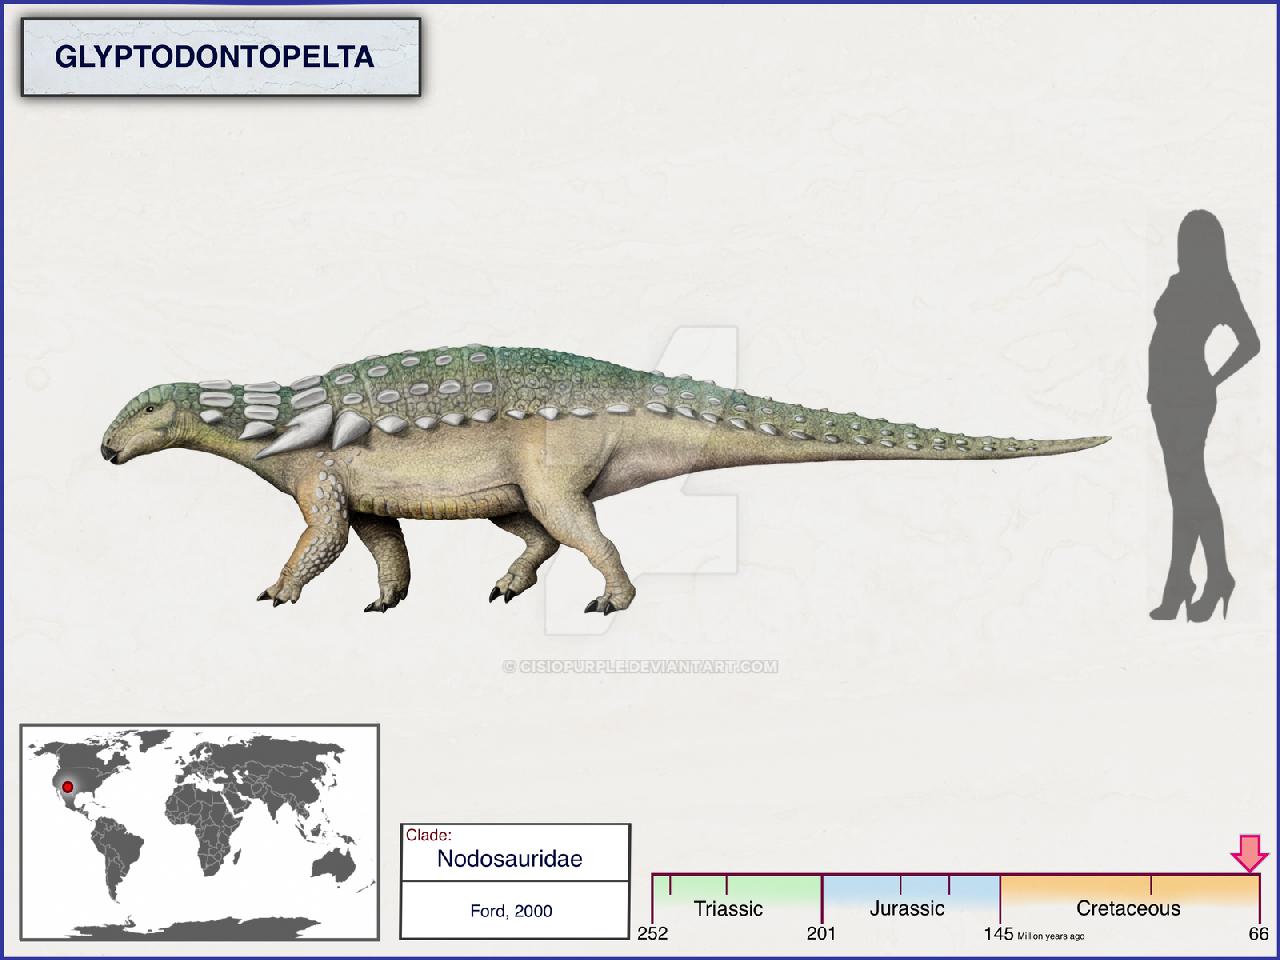 Glyptodontopelta, Cretaceous
(Меловой период)